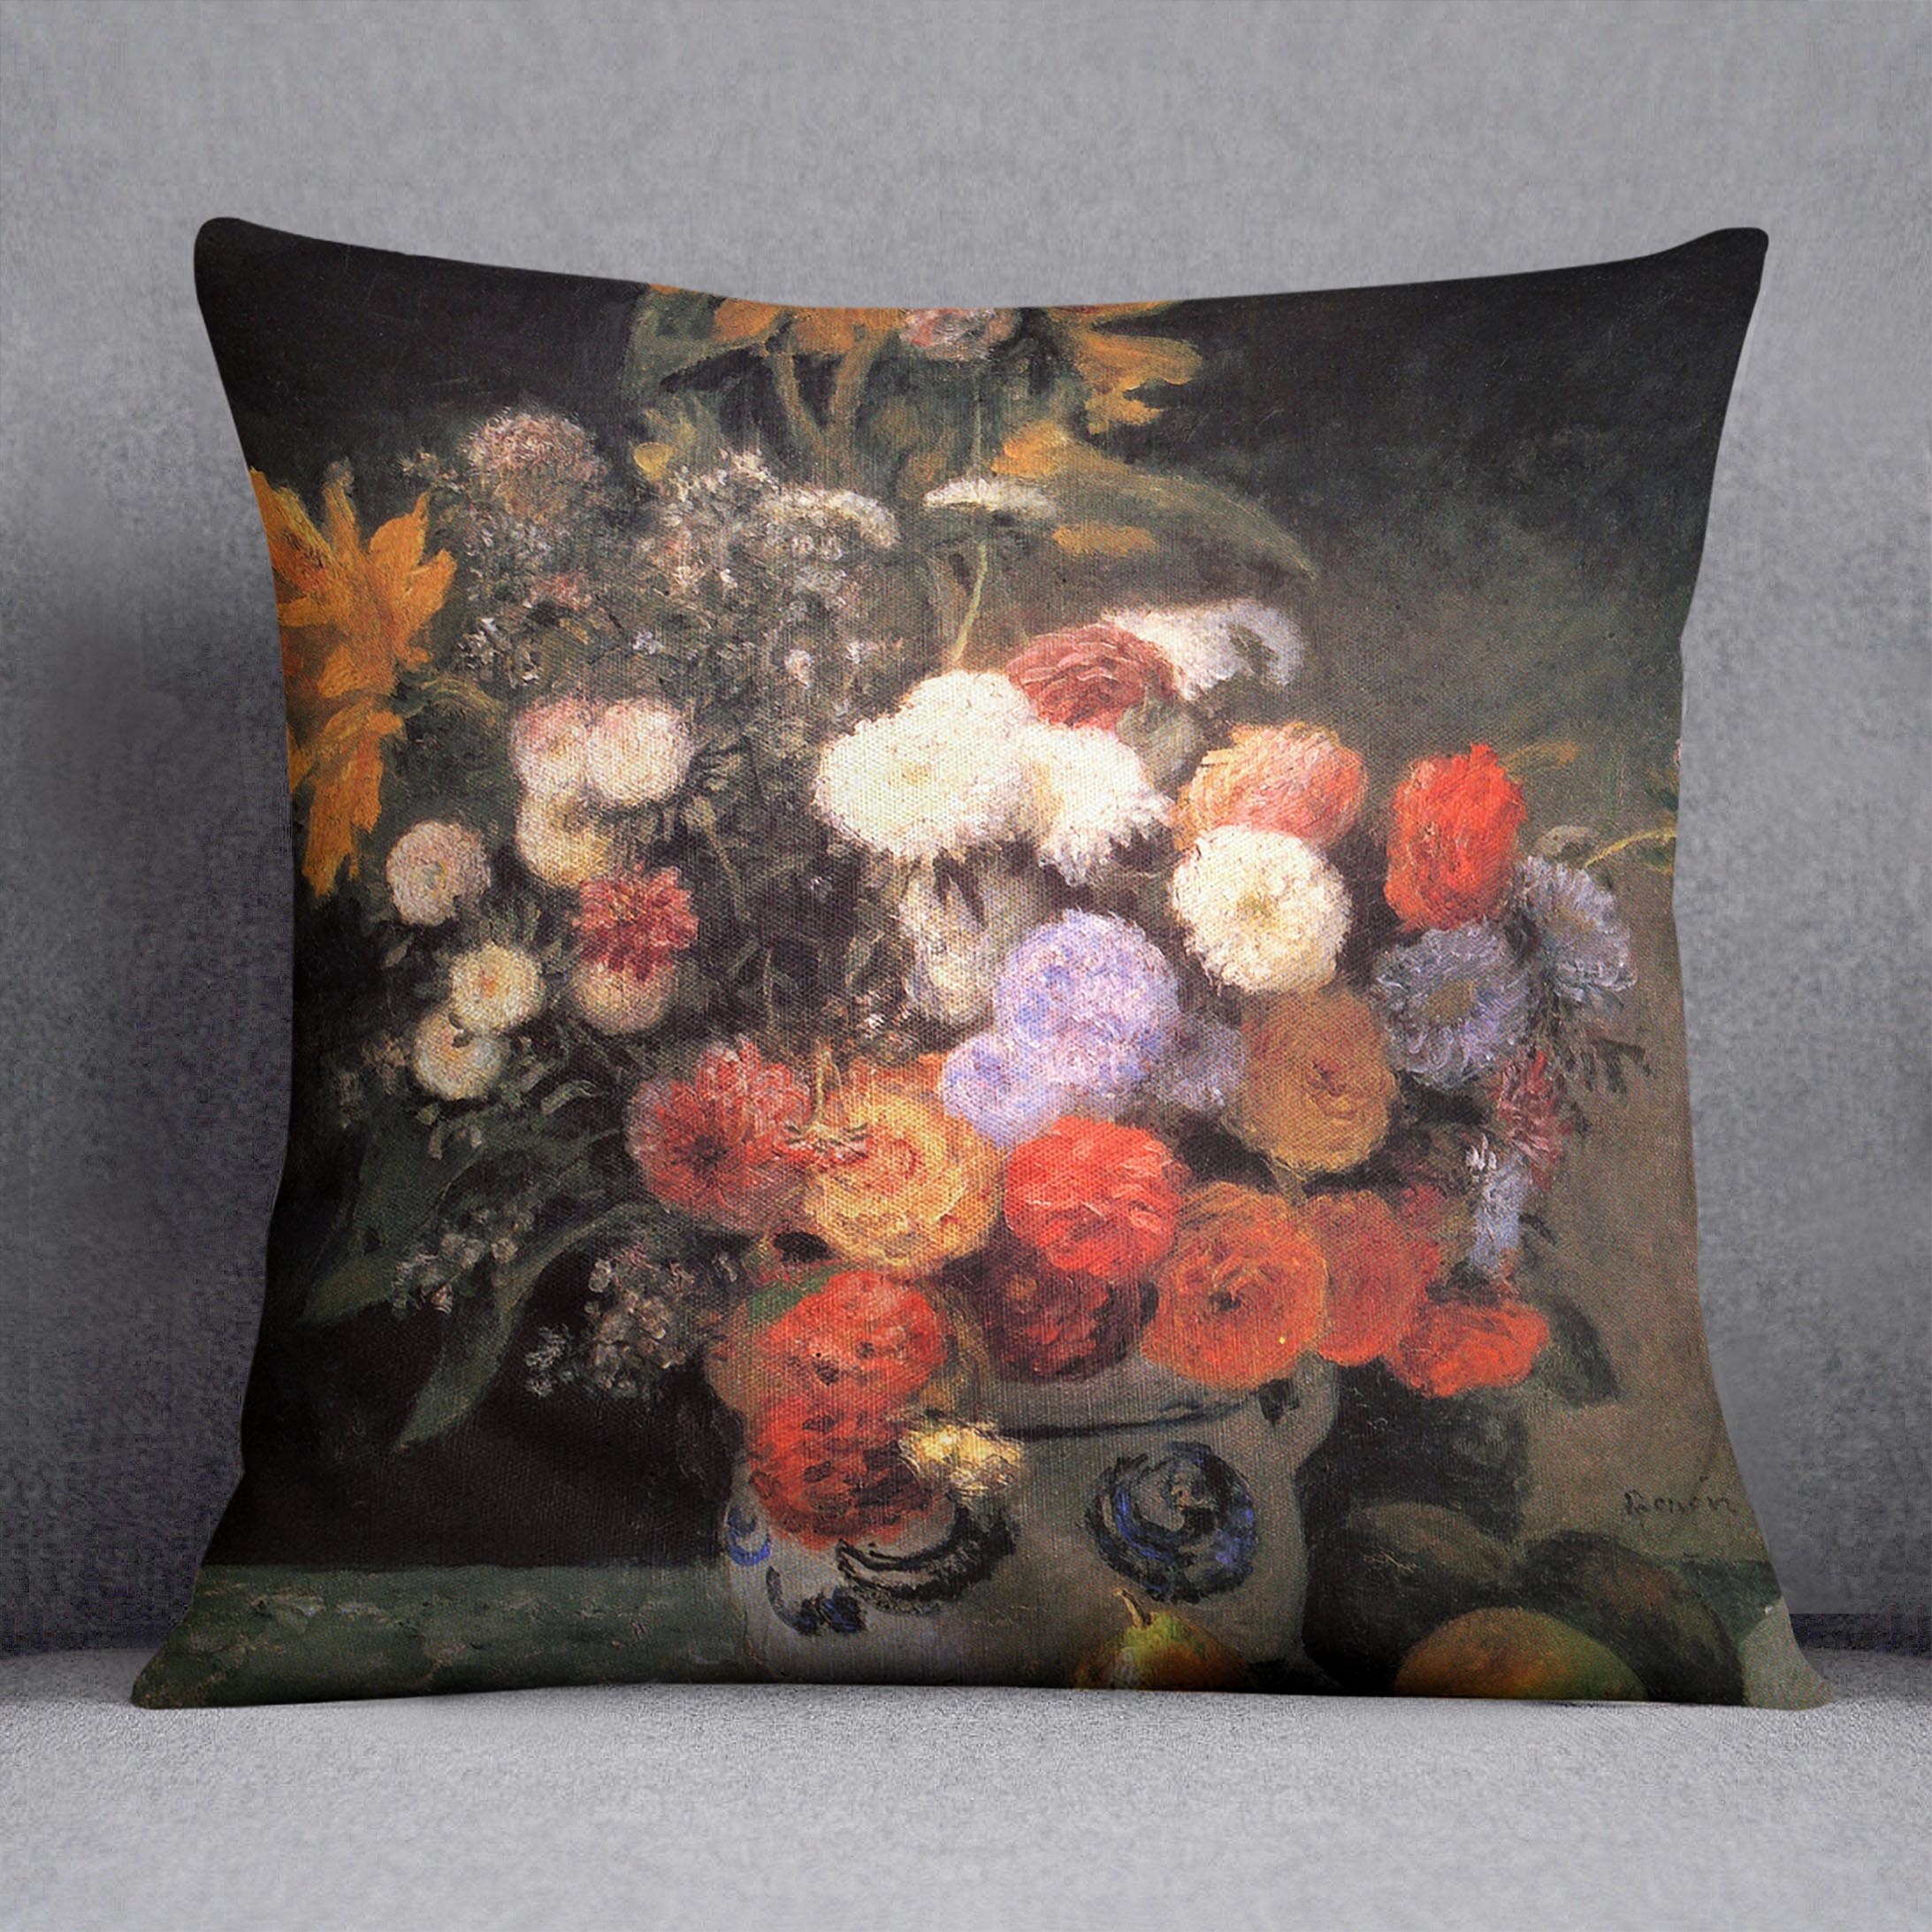 Flowers in a vase by Renoir Cushion